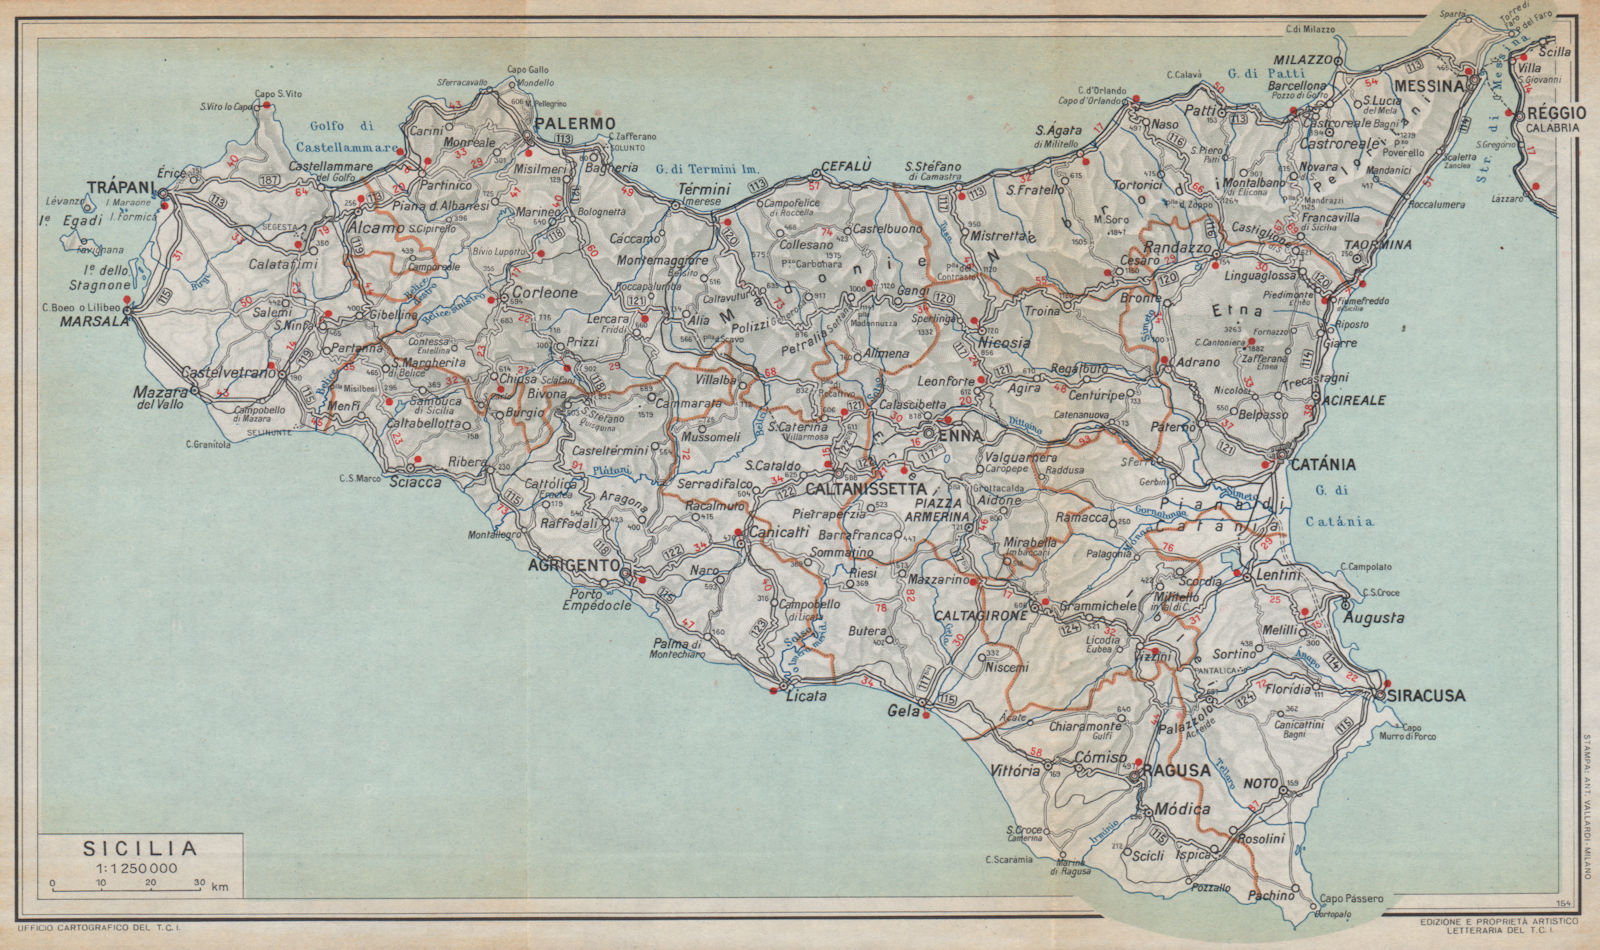 SICILIA Sicily vintage map. Roads railways. Italy 1958 old vintage chart